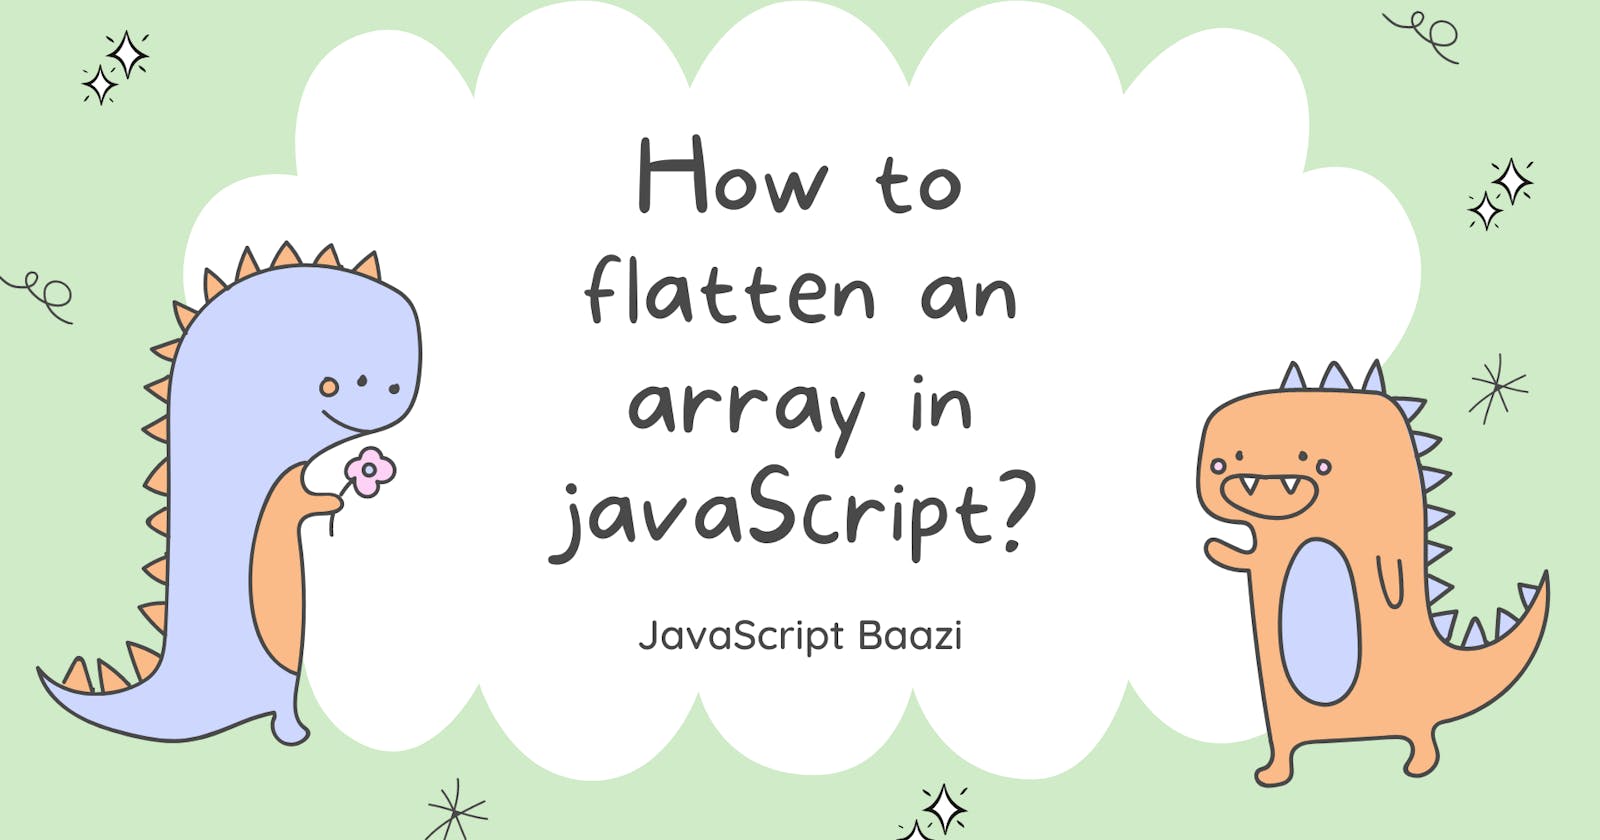 JavaScript Baazi: How to flatten an array in javaScript?